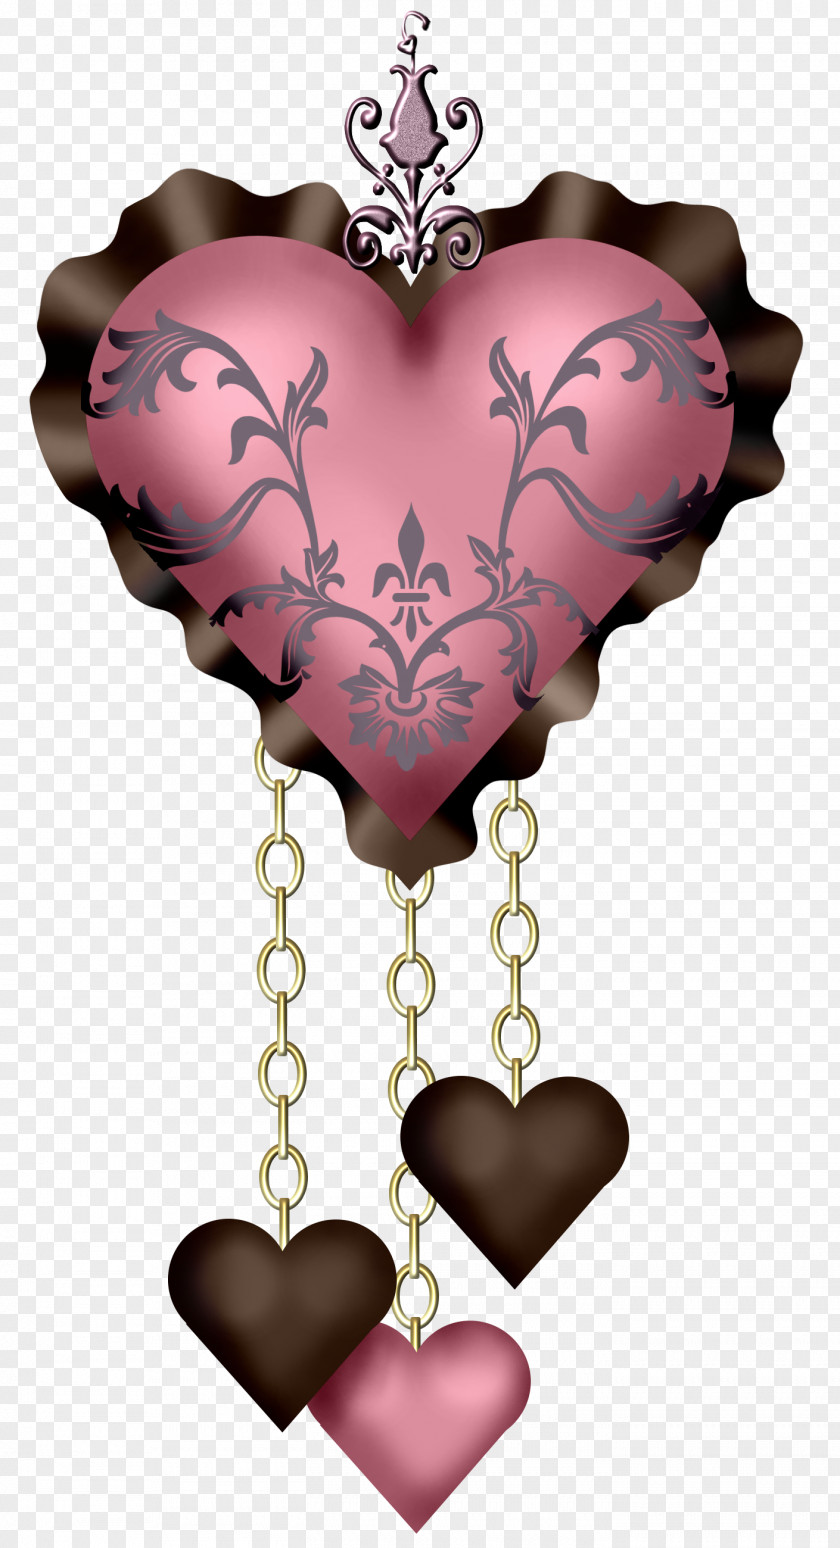 Heart Love Image Clip Art PNG